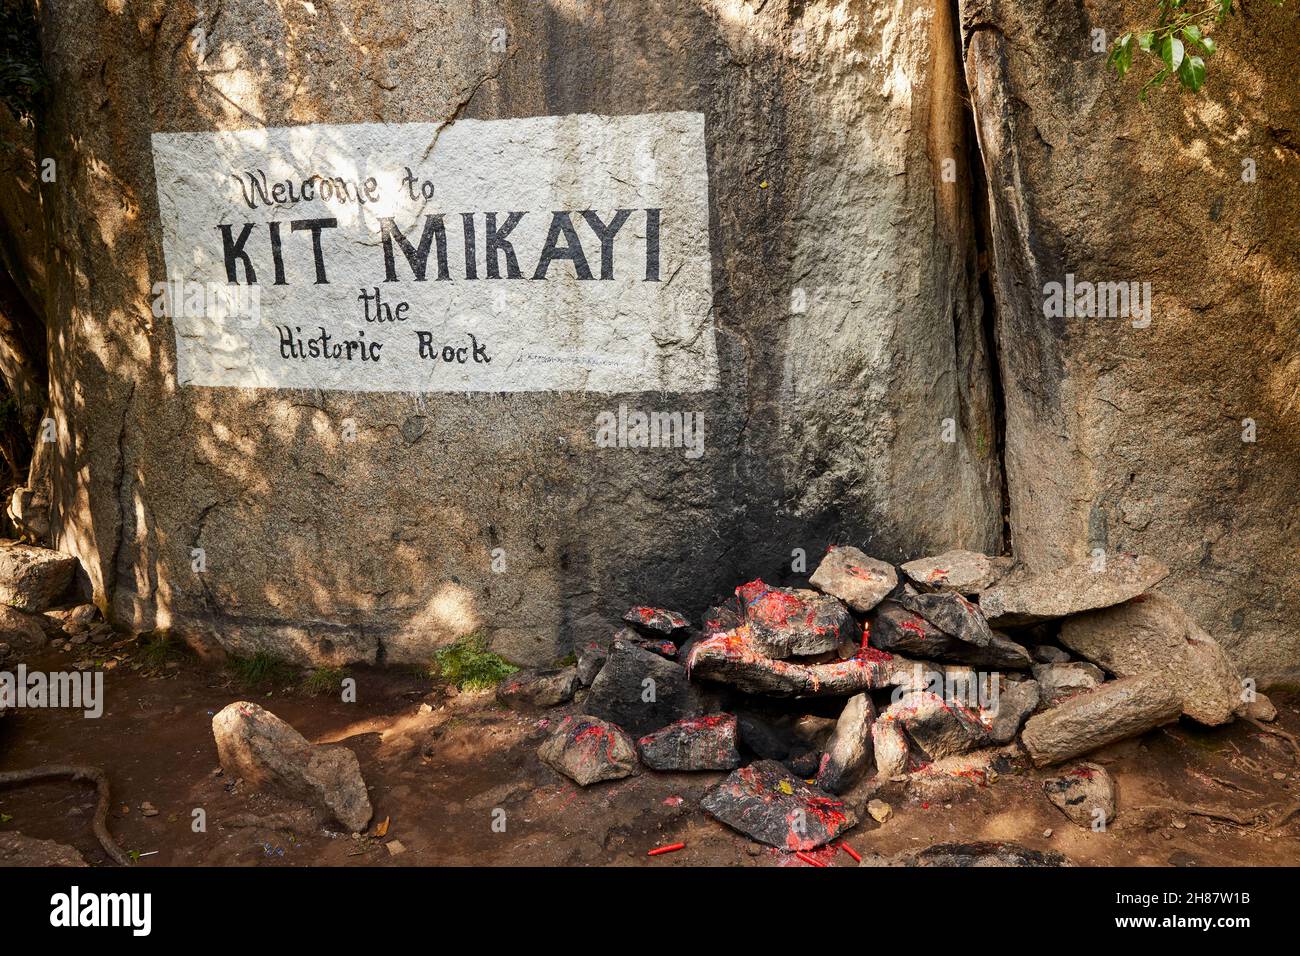 Kit Mikayi Kitmikayi Kitmikaye formazione storica roccia in Kenya, Africa Foto Stock